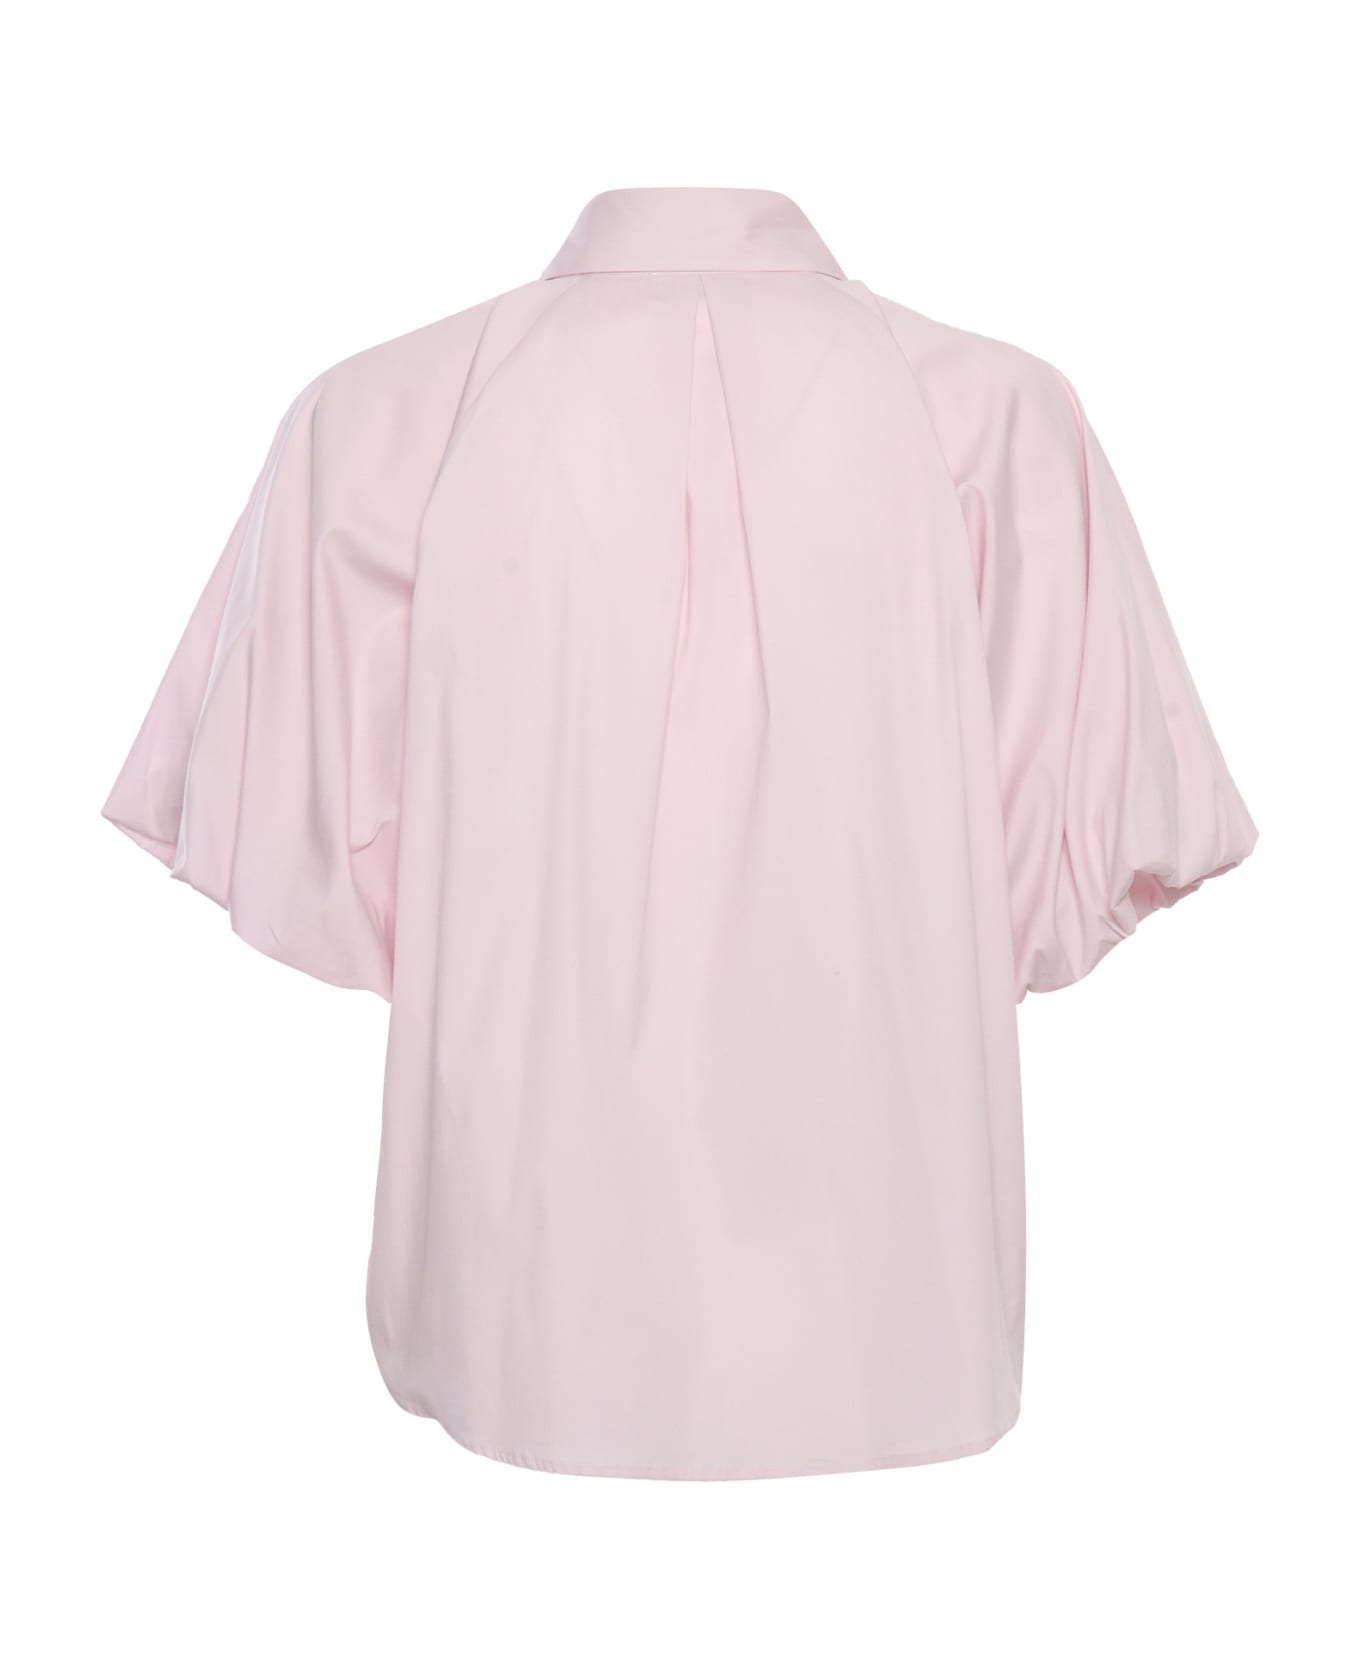 Mazzarelli Pink Shirt - PINK シャツ